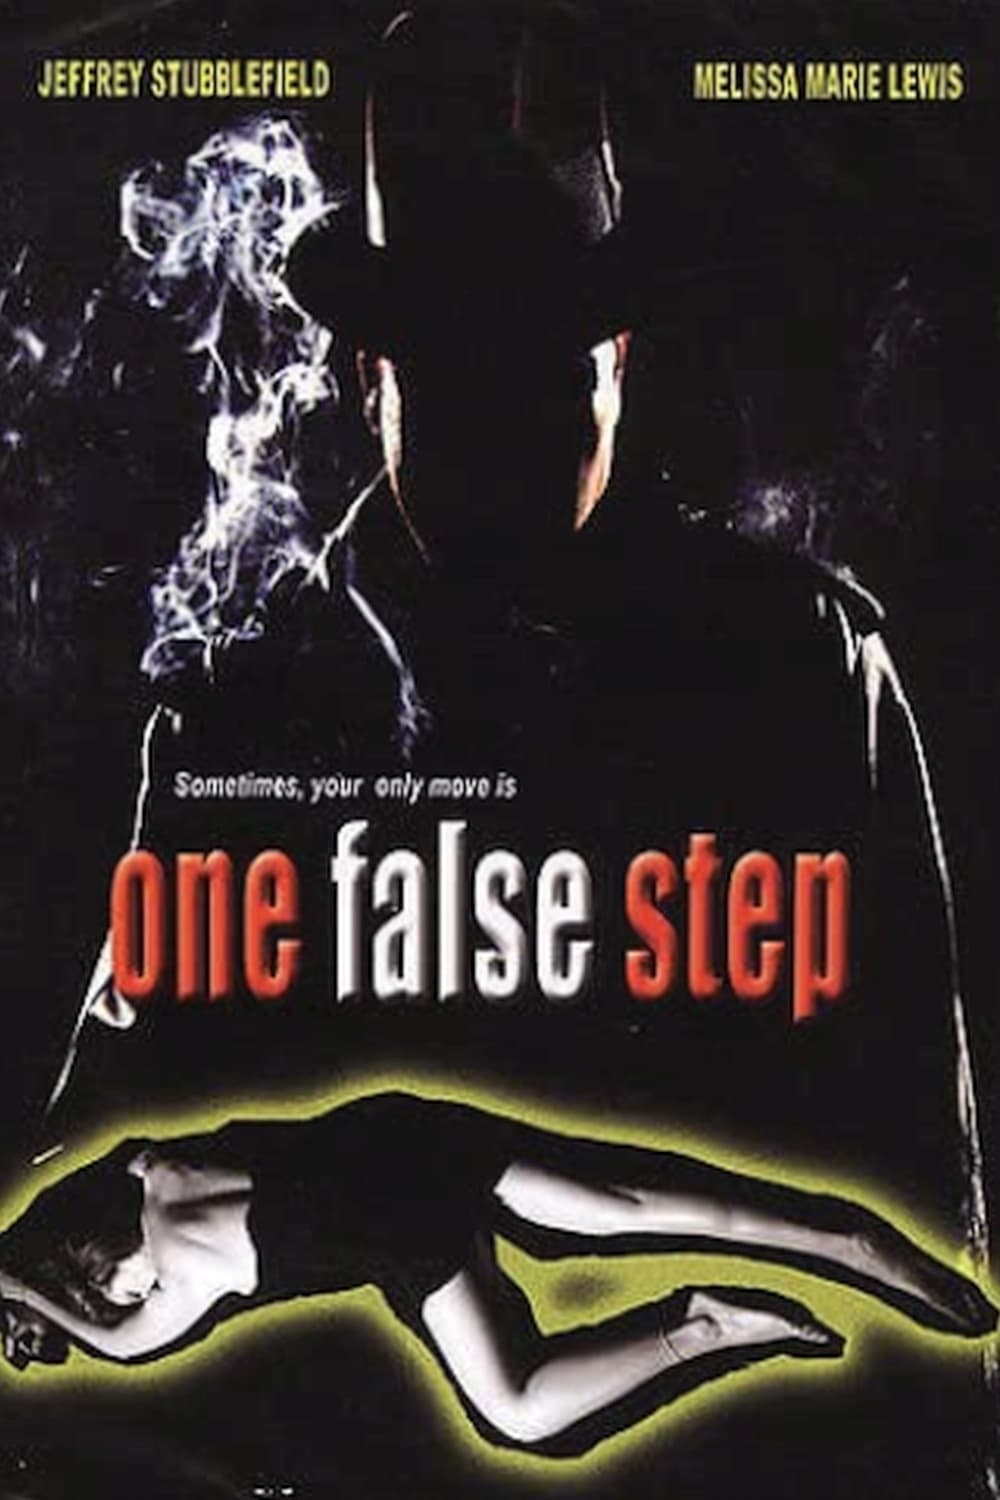 One False Step